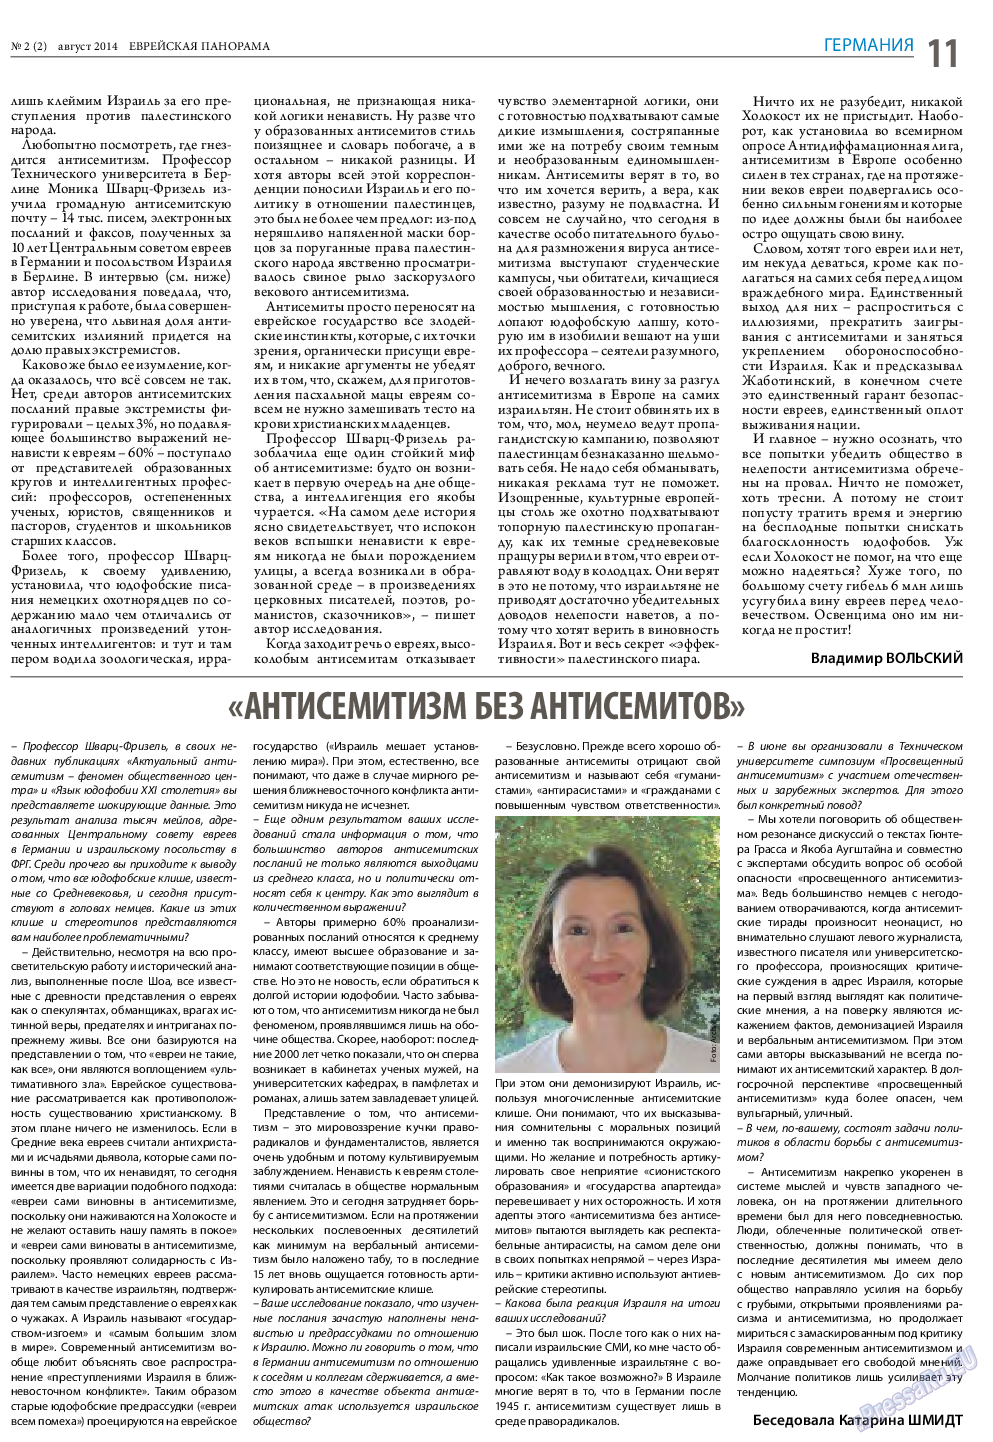 Еврейская панорама, газета. 2014 №2 стр.11